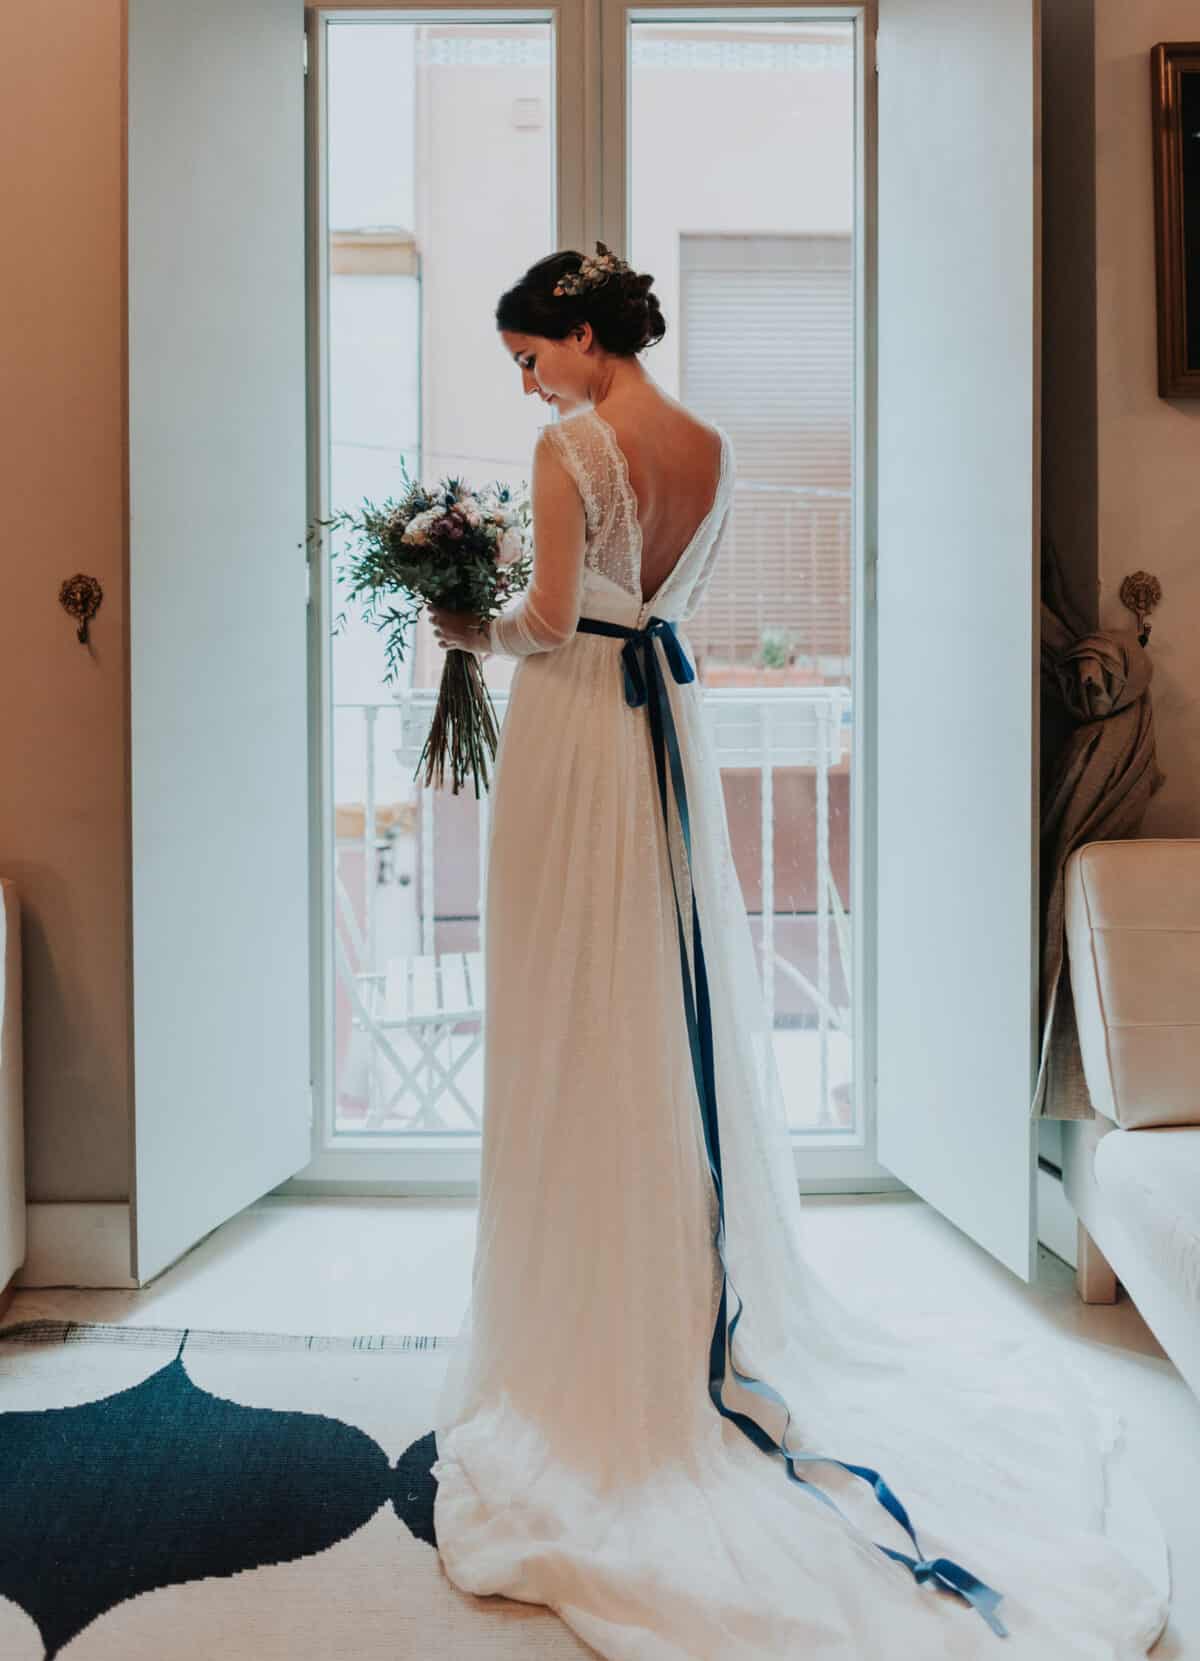 La novia del vestido del lazo terciopelo azul - Las de Tatín